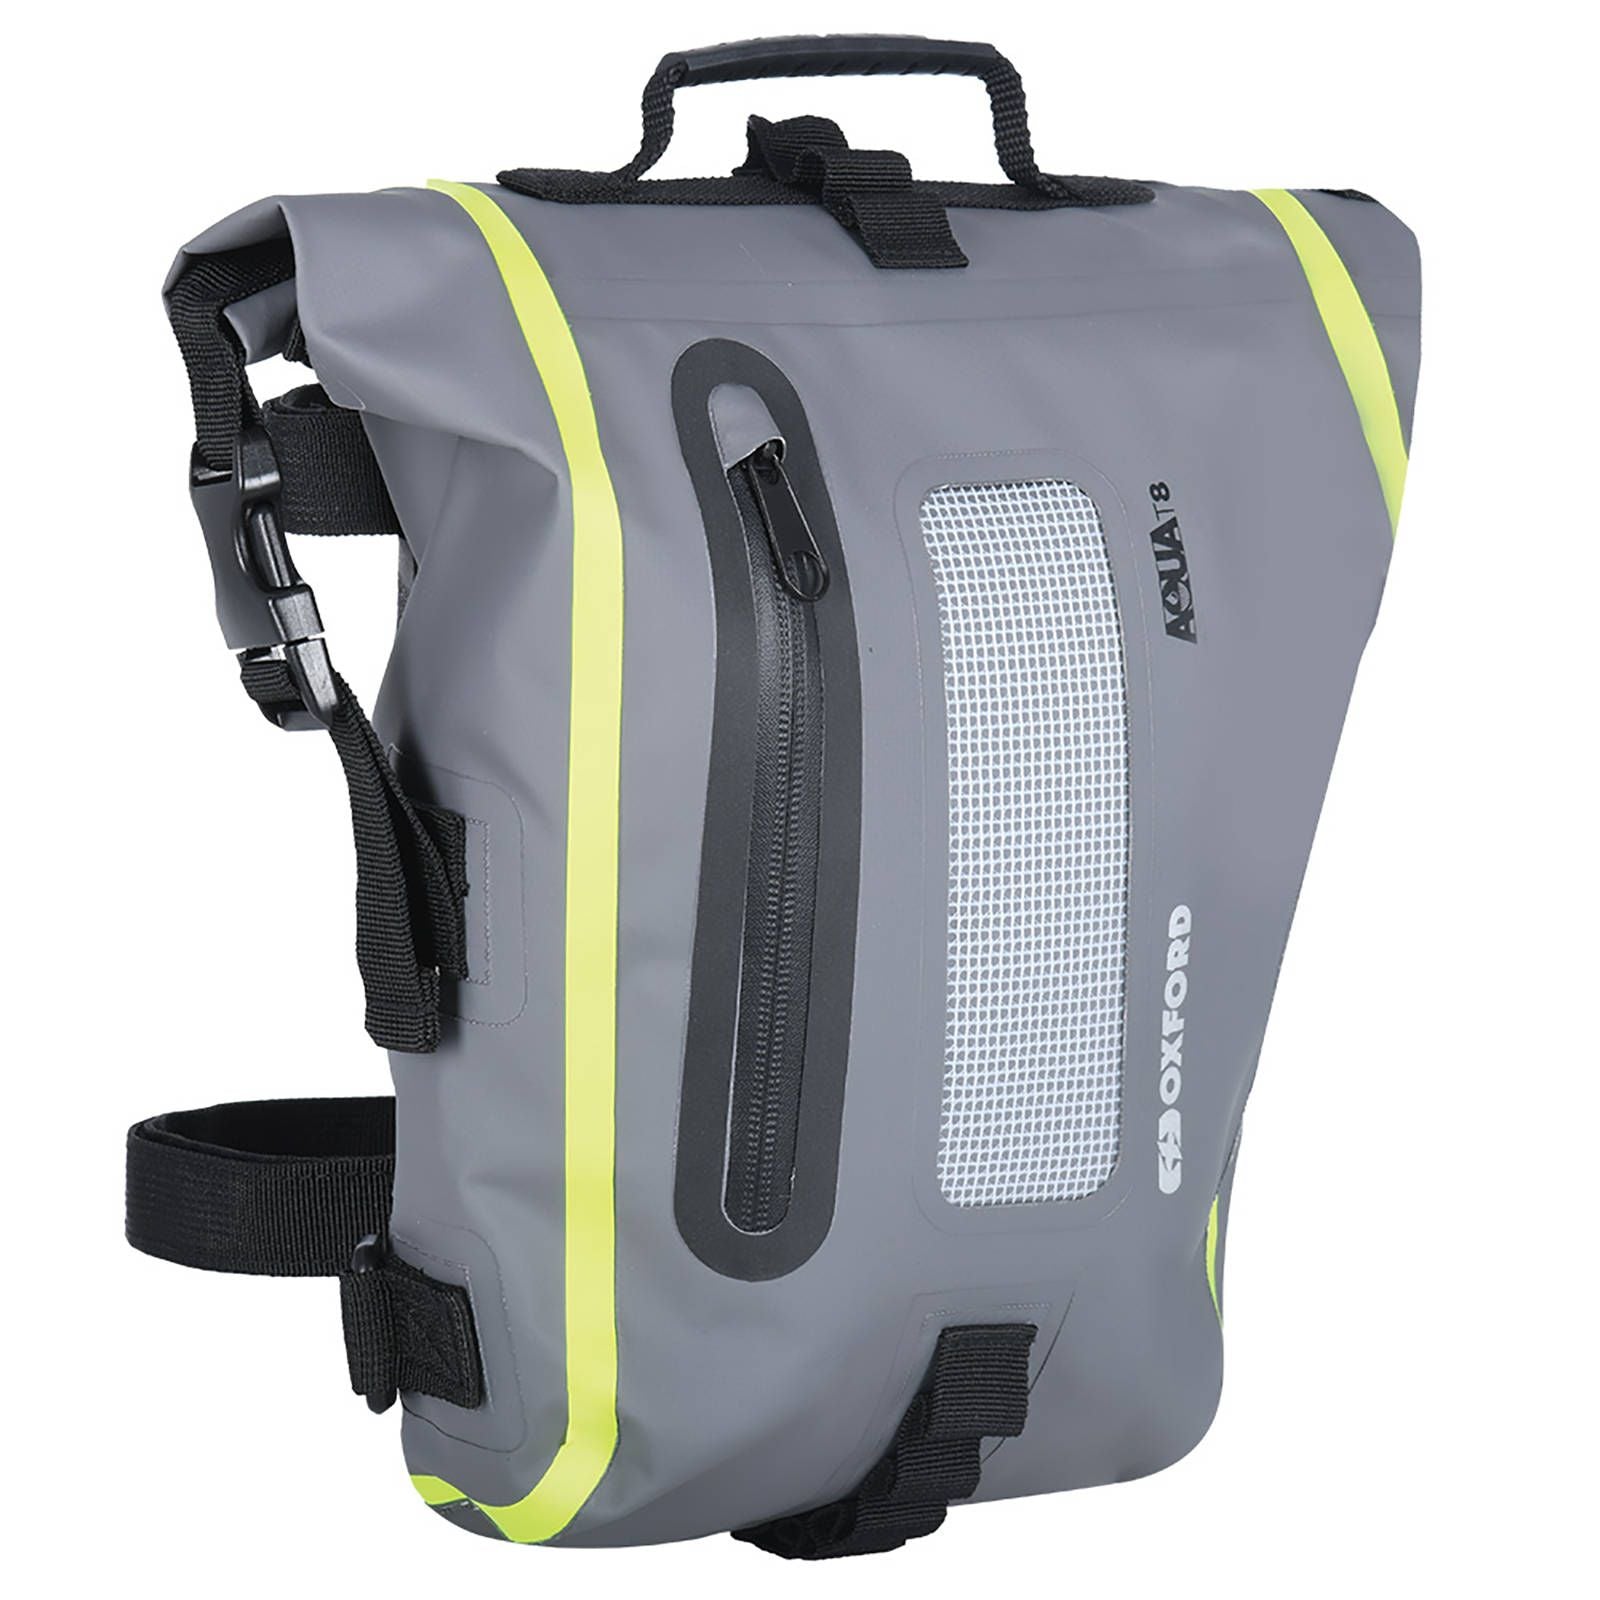 New OXFORD Aqua Tail Bag T8 - Black / Grey / Fluro Yellow #OXOL465